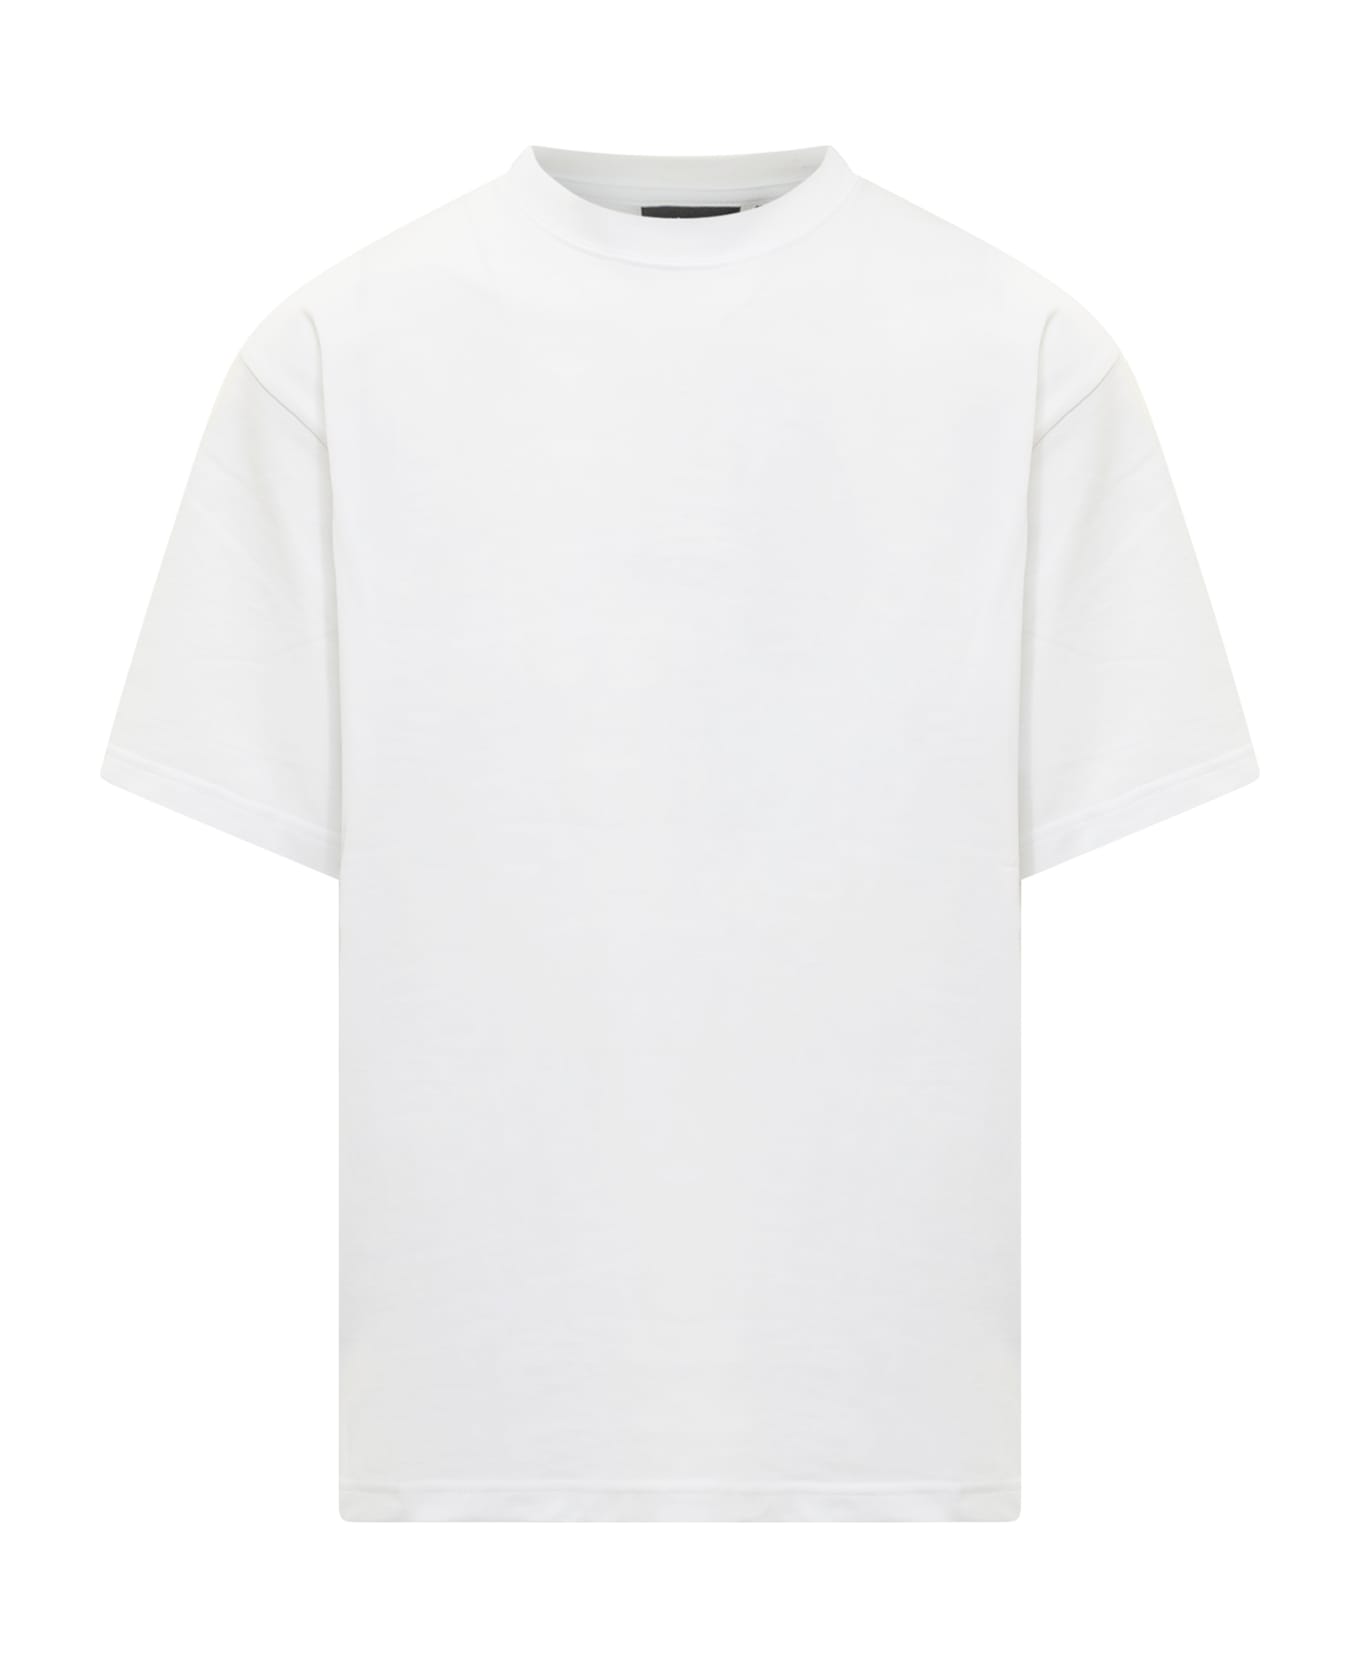 44 Label Group 44 T-shirt T-Shirt - WHITE シャツ